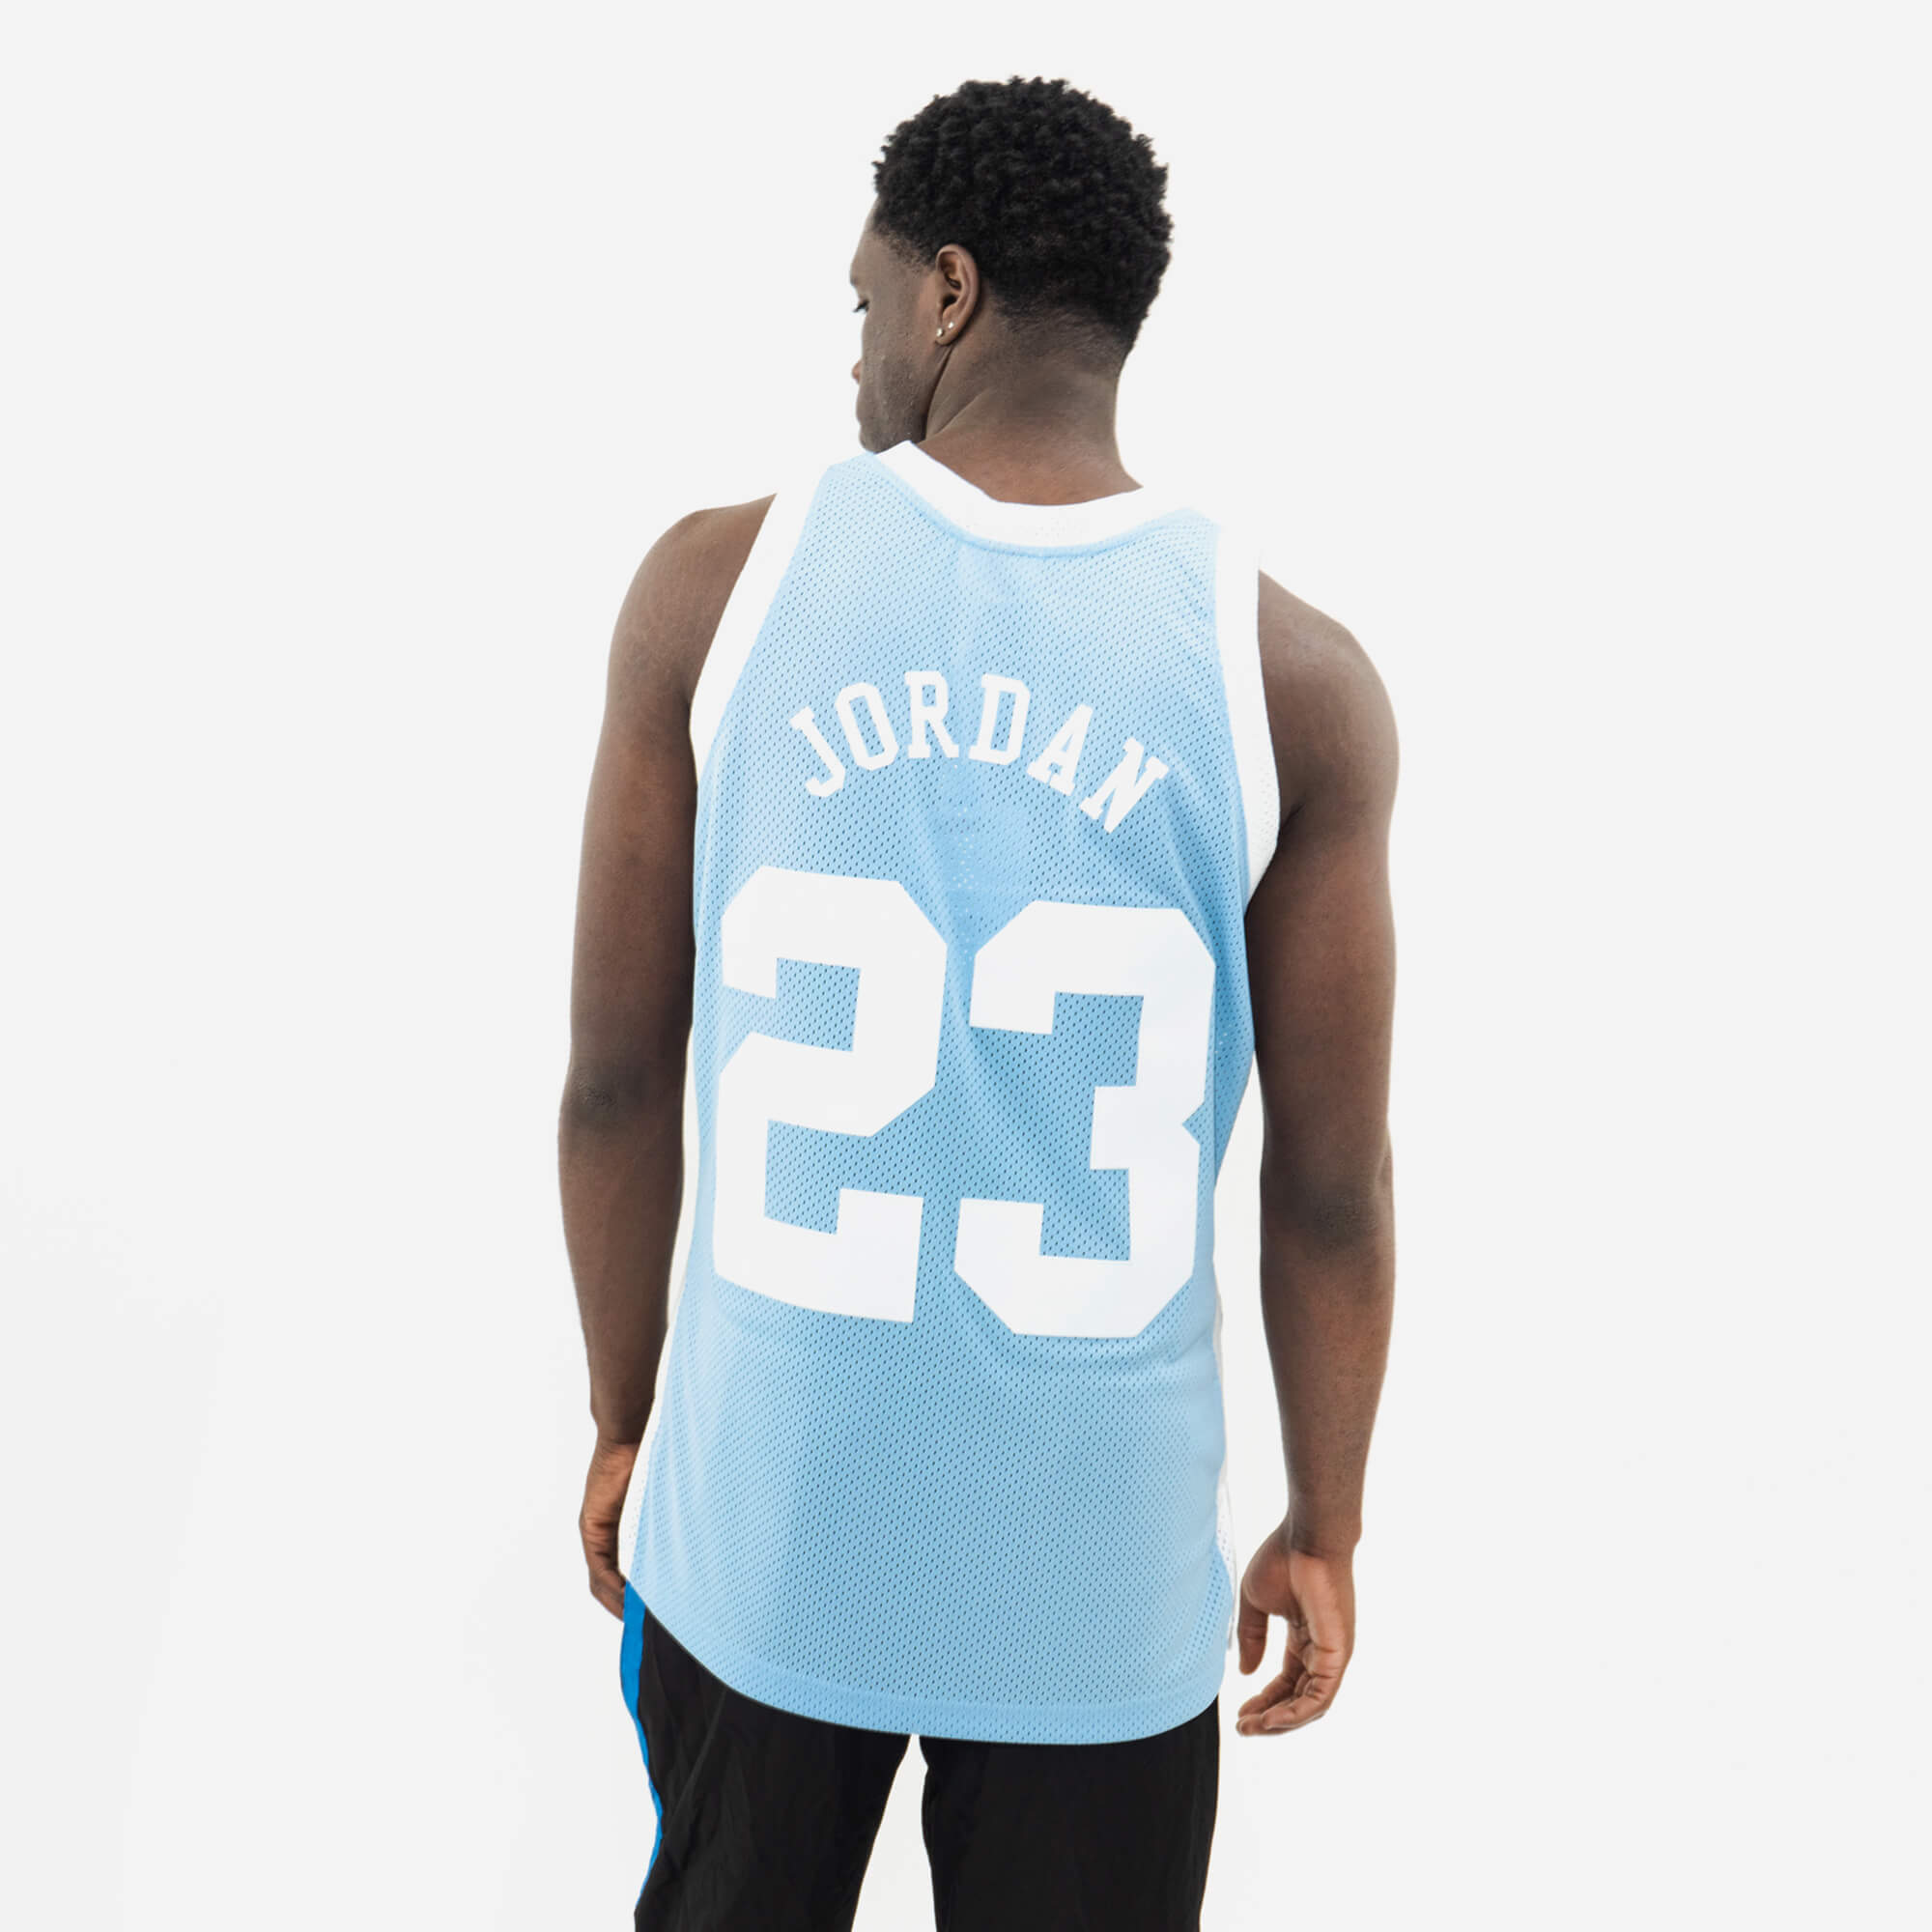 Michael Jordan UNC Capsule – Basketball Jersey World